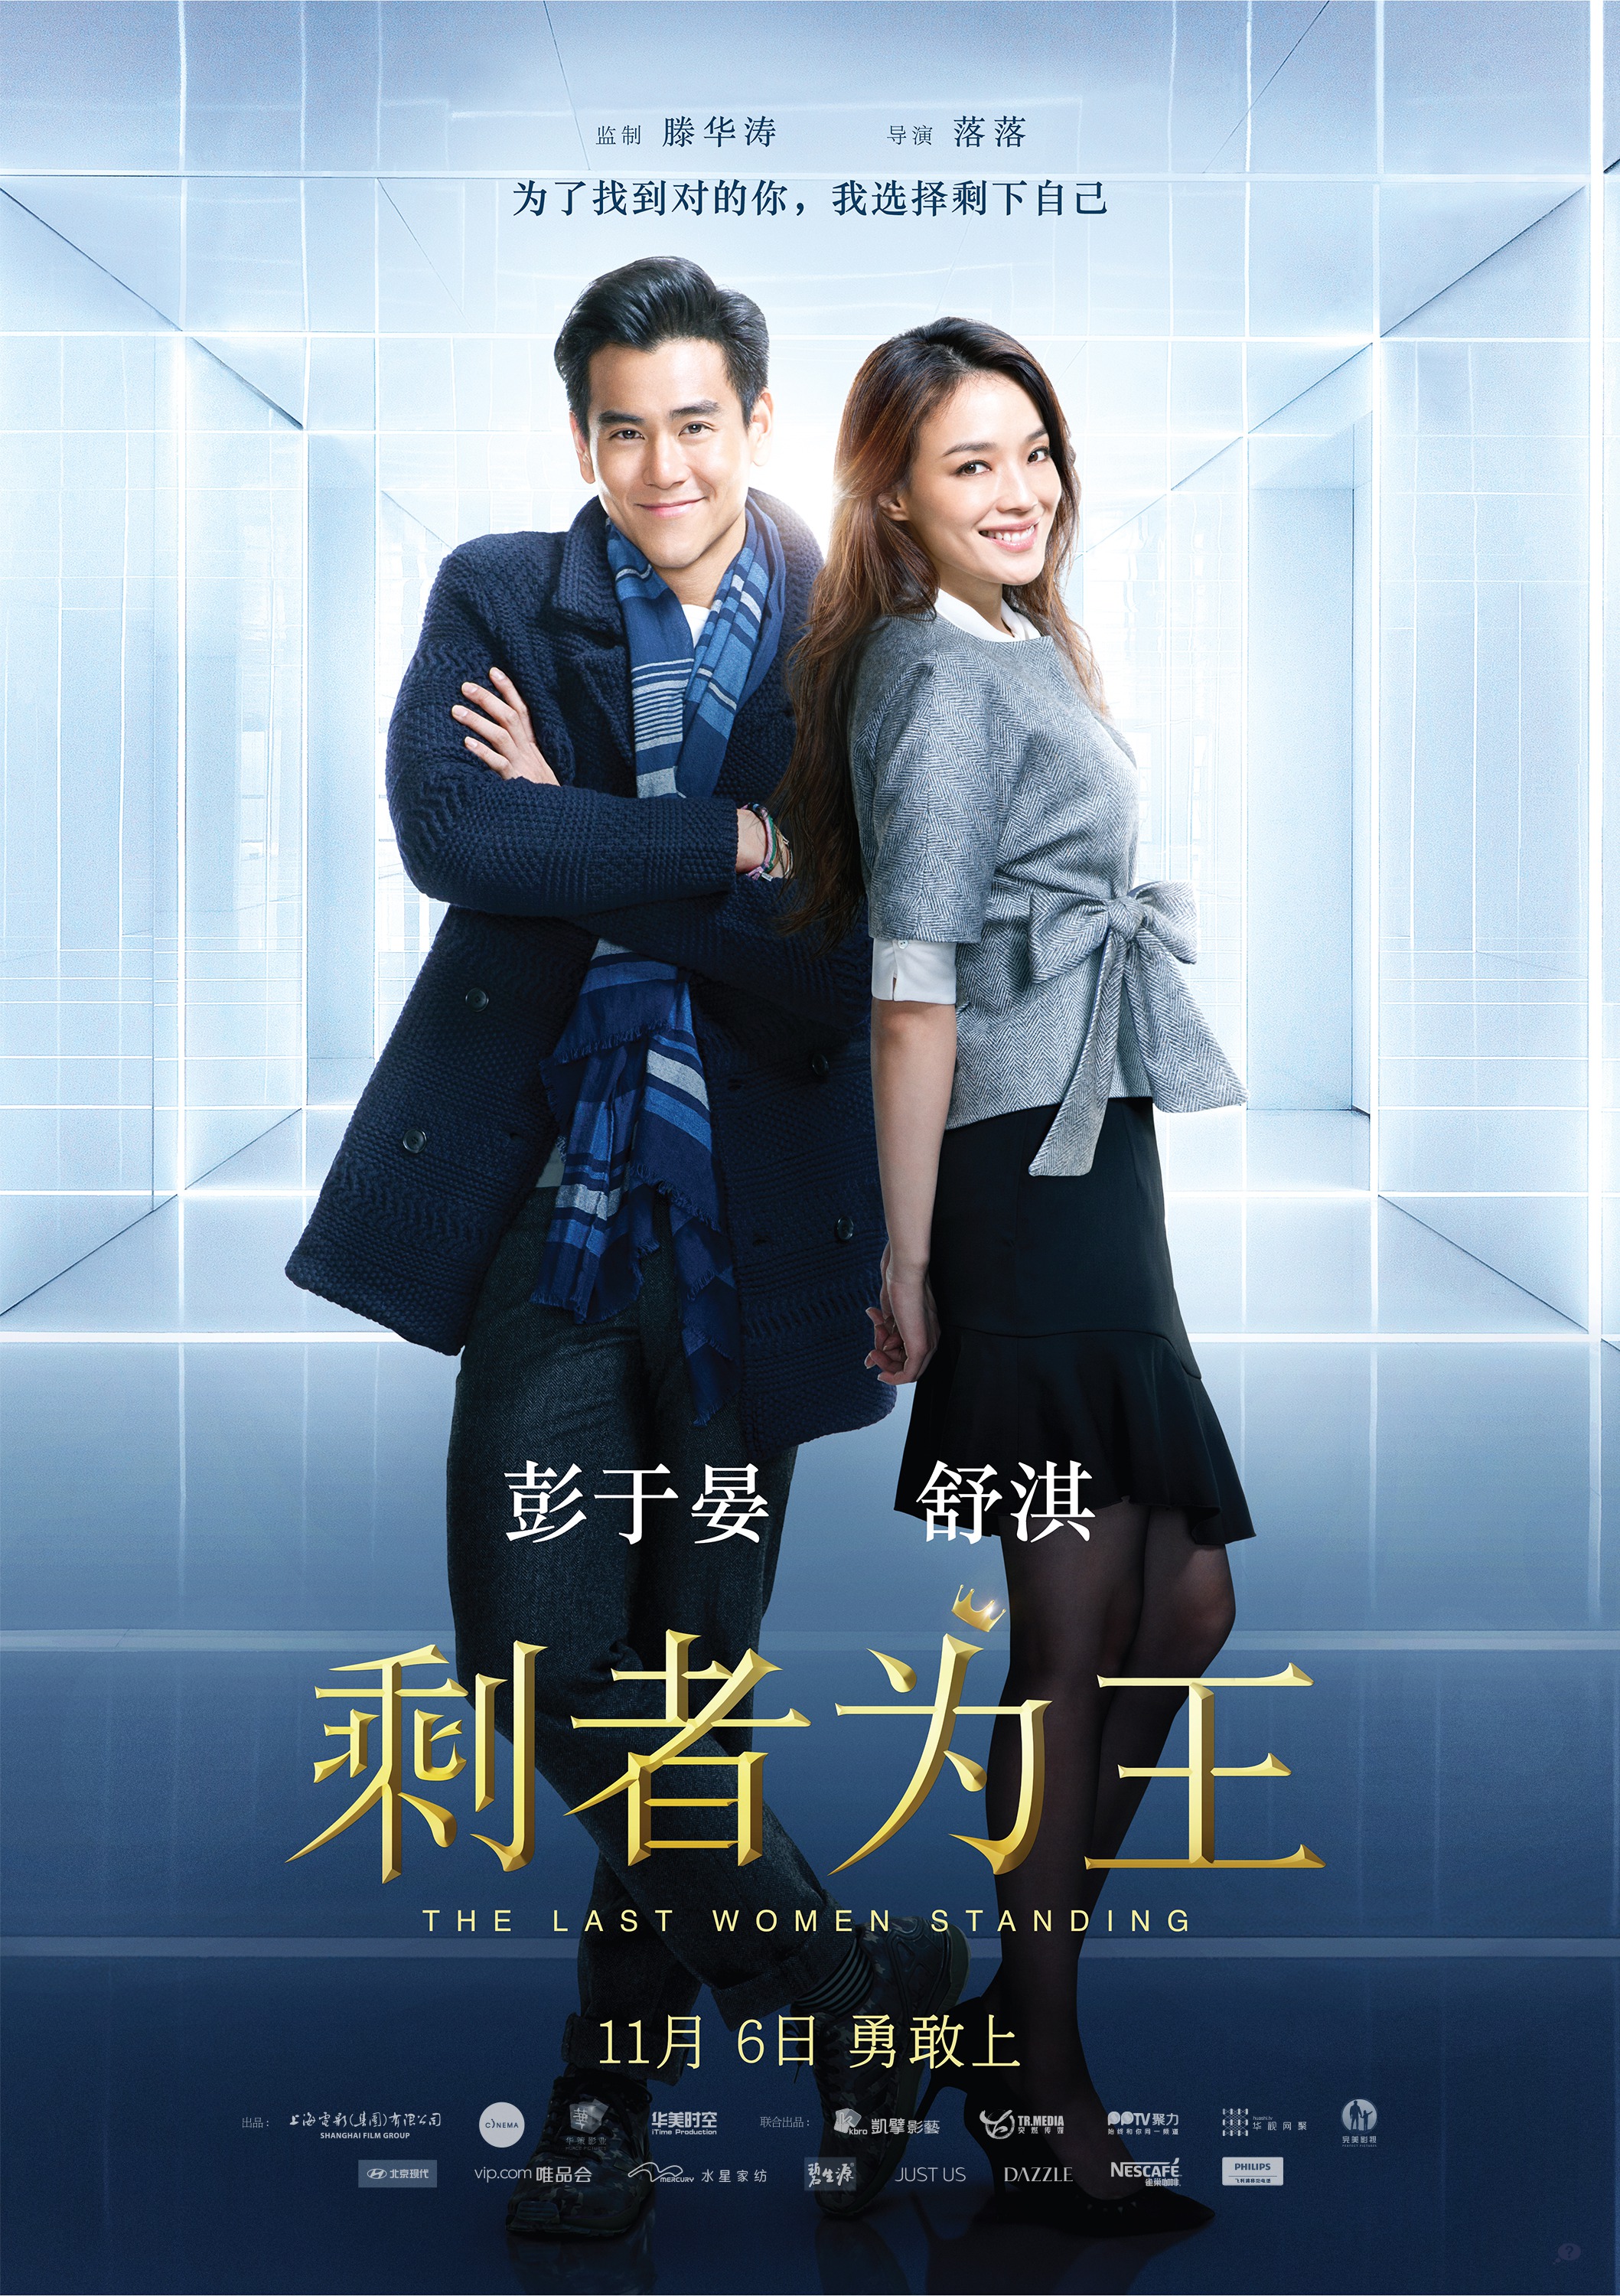 Mega Sized Movie Poster Image for Sheng zhe wei wang (#3 of 3)